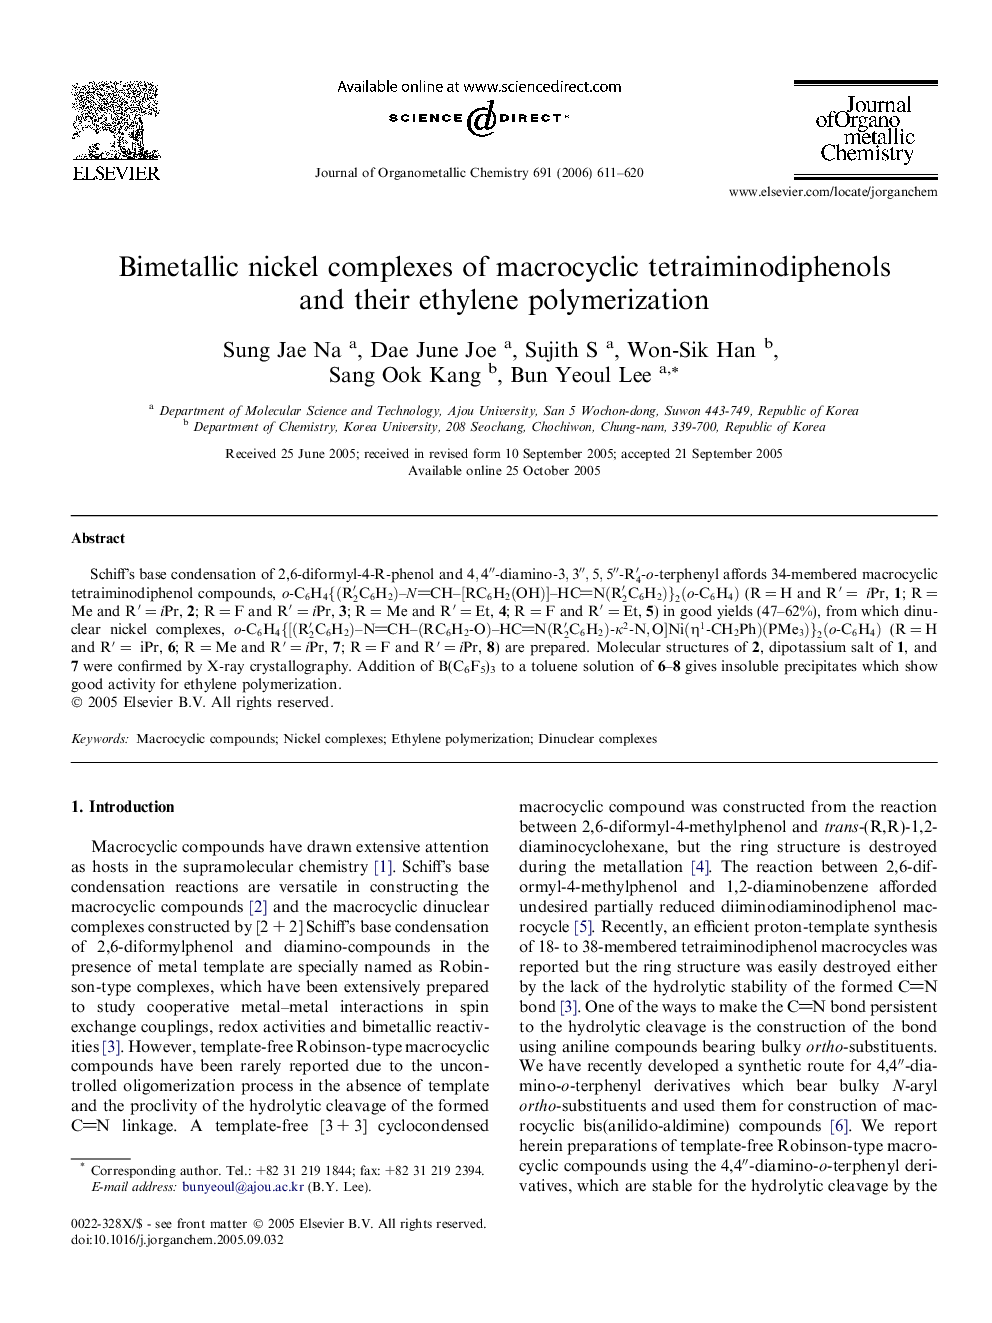 Bimetallic nickel complexes of macrocyclic tetraiminodiphenols and their ethylene polymerization